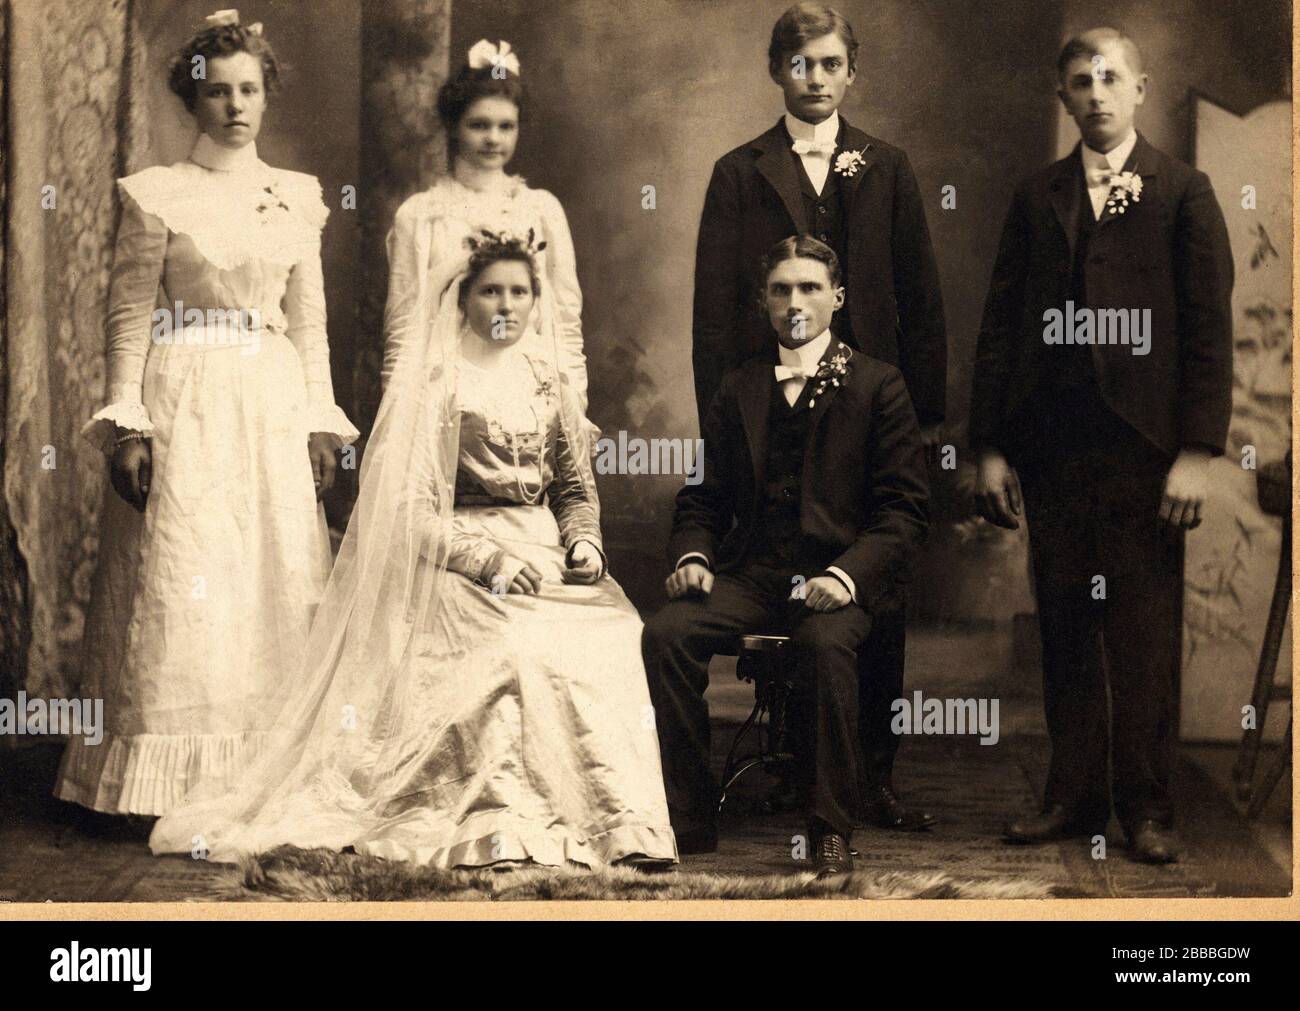 1900 ca. , Oshkosh , Winsconsin , USA: Ein Ehepaar posiert im Atelier des Fotografen SPOSI - SPOSALIZIO - MATRIMONIO - JUST MARRIED - MARRIAGE - Coppia - marito e Moglie - Ehemann und Ehefrau - abito da sposa - Hochzeitskleid - Schleier - velo - Krawatte - papillon - Krawatte - Krawatte - Krawatte - Krawatte - Krawatte - Krawatte - Krawatte - Colletto - papillon - Strascico - poso - Cerimonia di nozze - gente comune - normale Leute - FOTO STORICHE - GESCHICHTE - Album - vita privata - Privatleben - MODE - MODA - Kostüm - testimonio - testimoni - testimone - weiß - bianco --- Archivio GBB Stockfoto